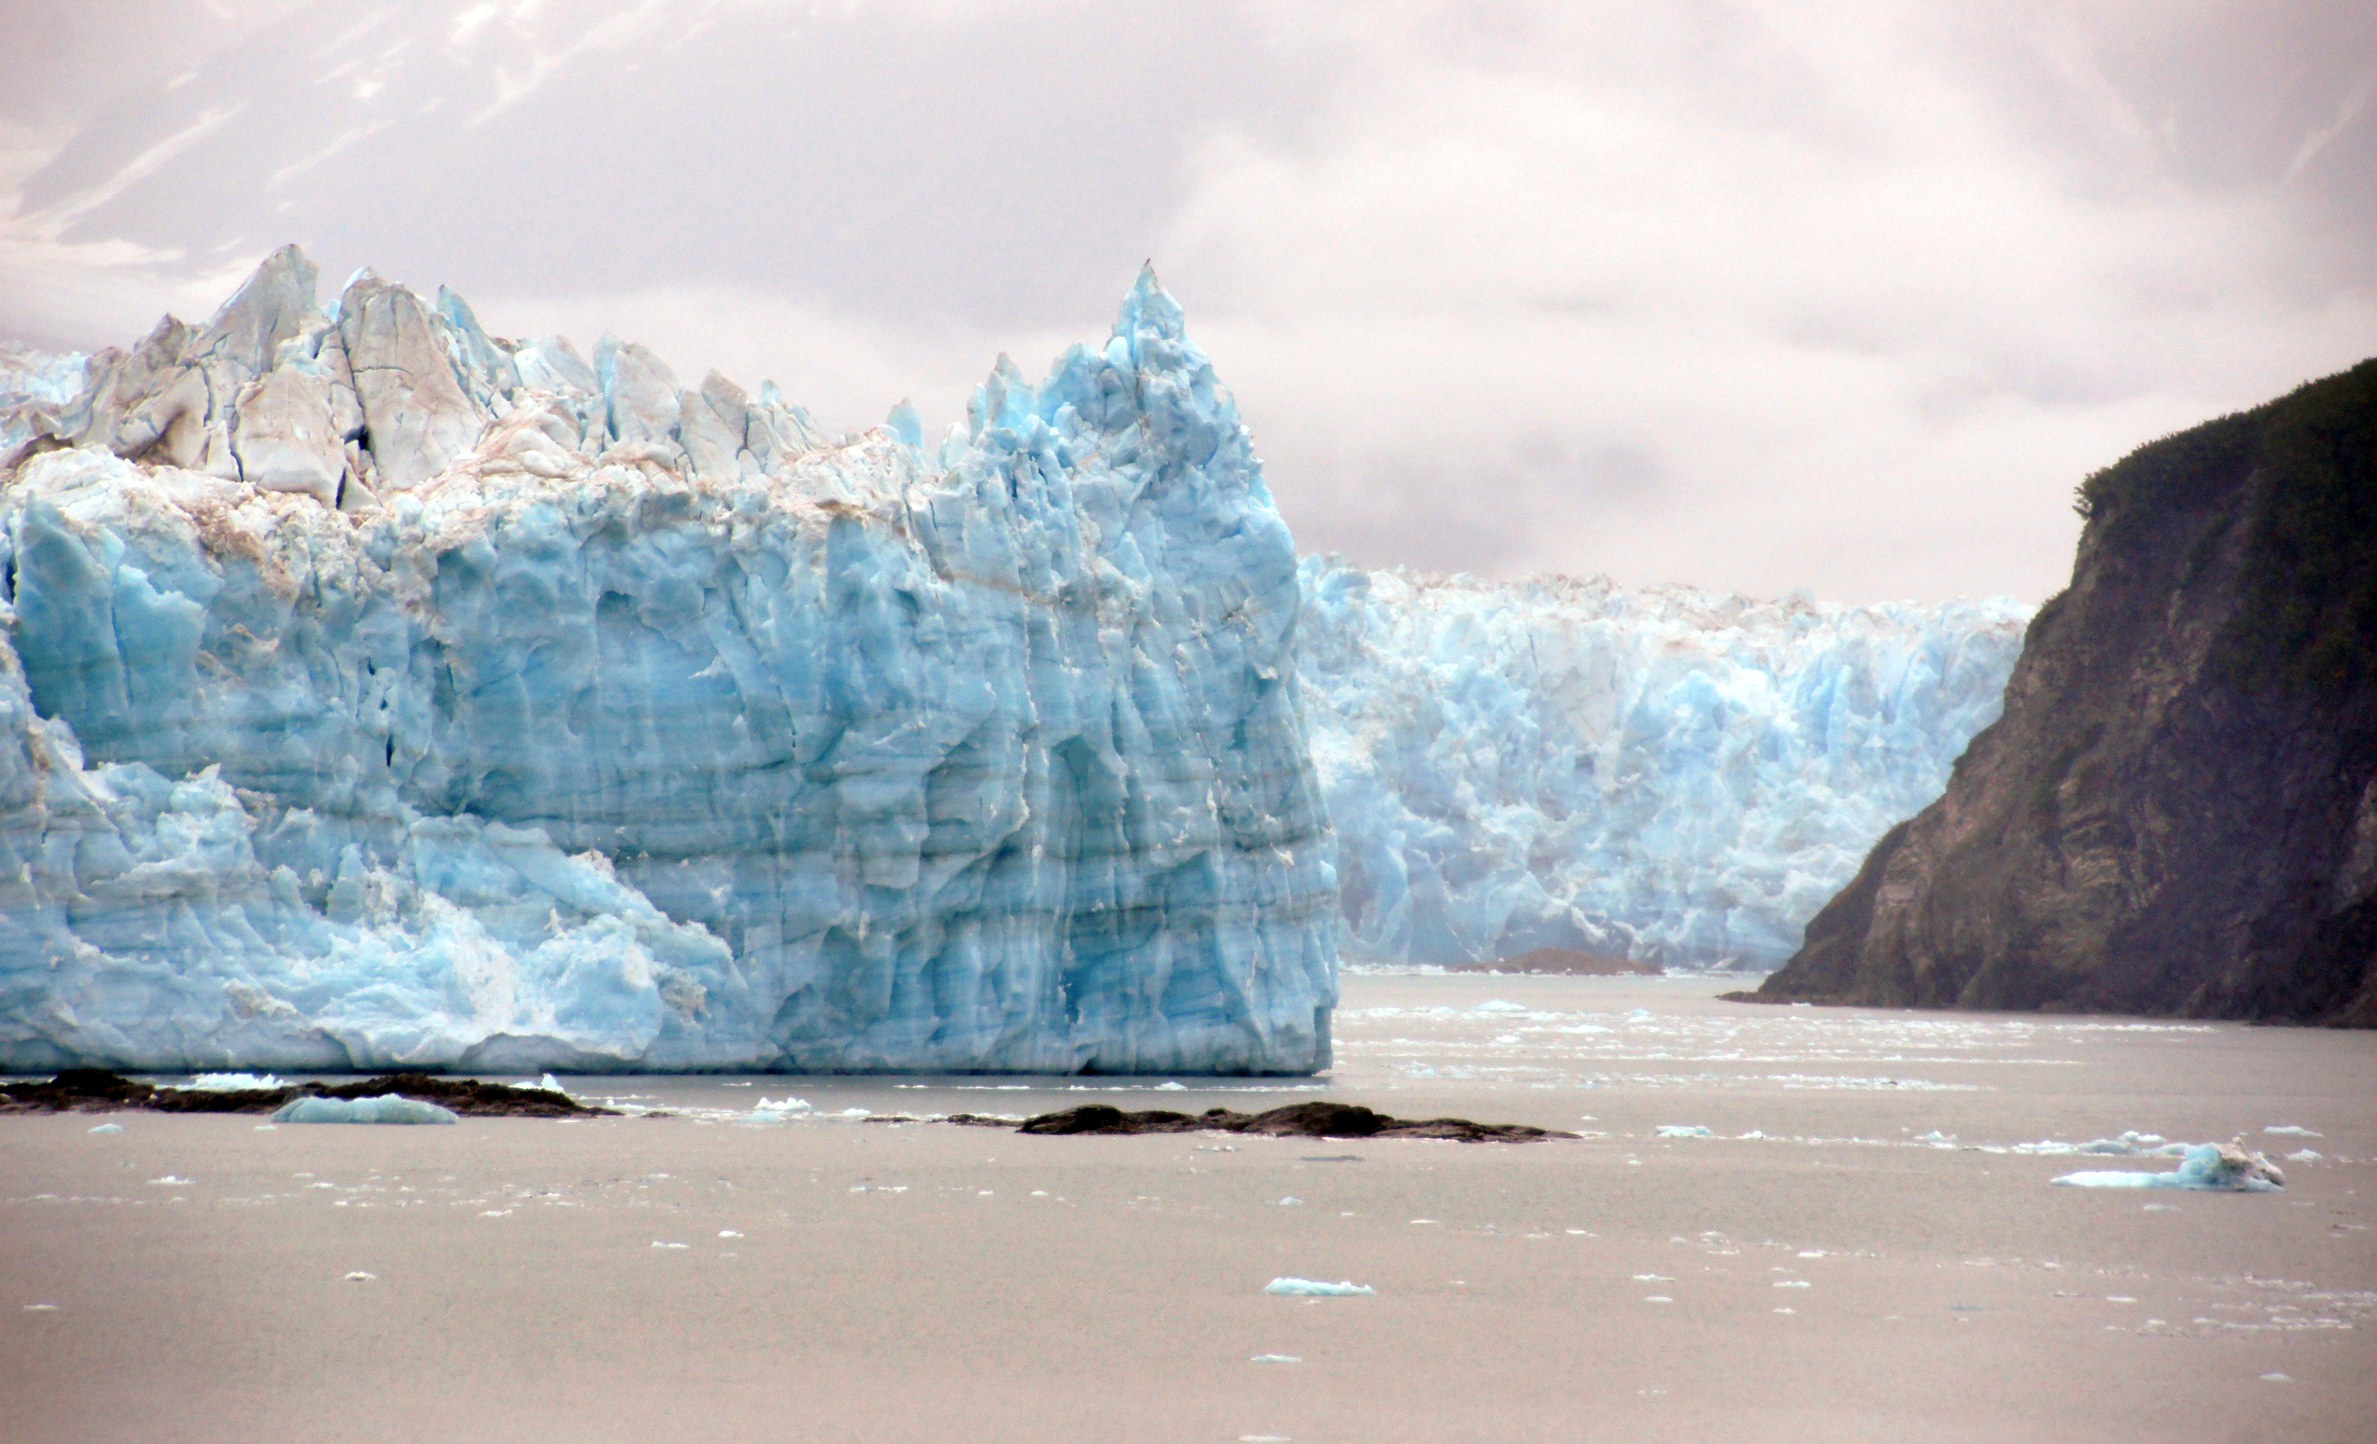 File:Hubbard Glacier Alaska.jpg - Wikimedia Commons